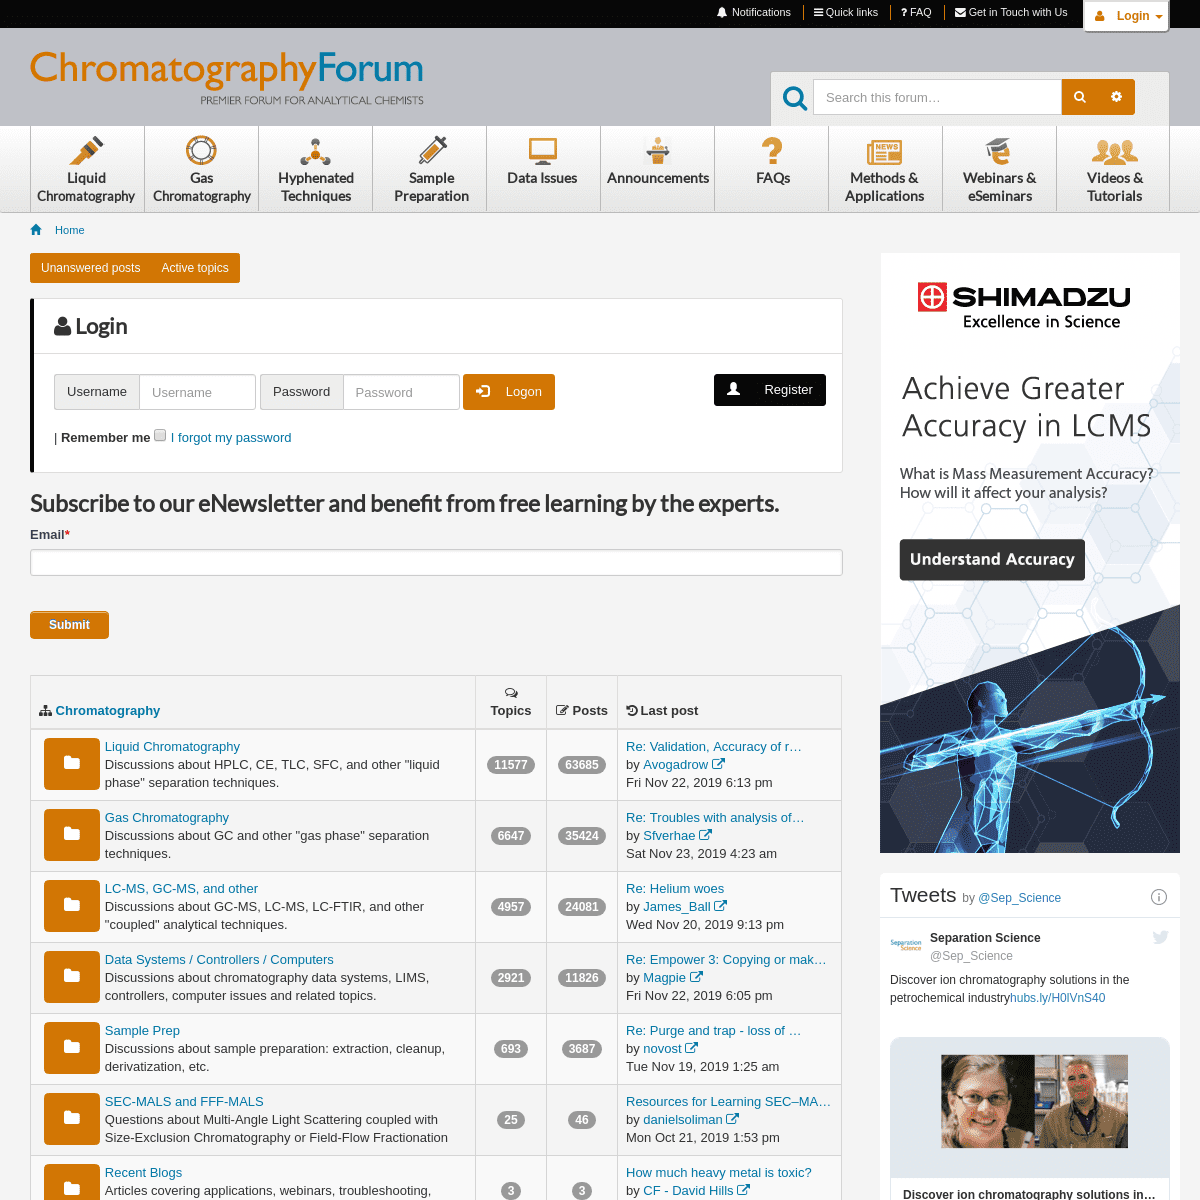 A complete backup of chromforum.org